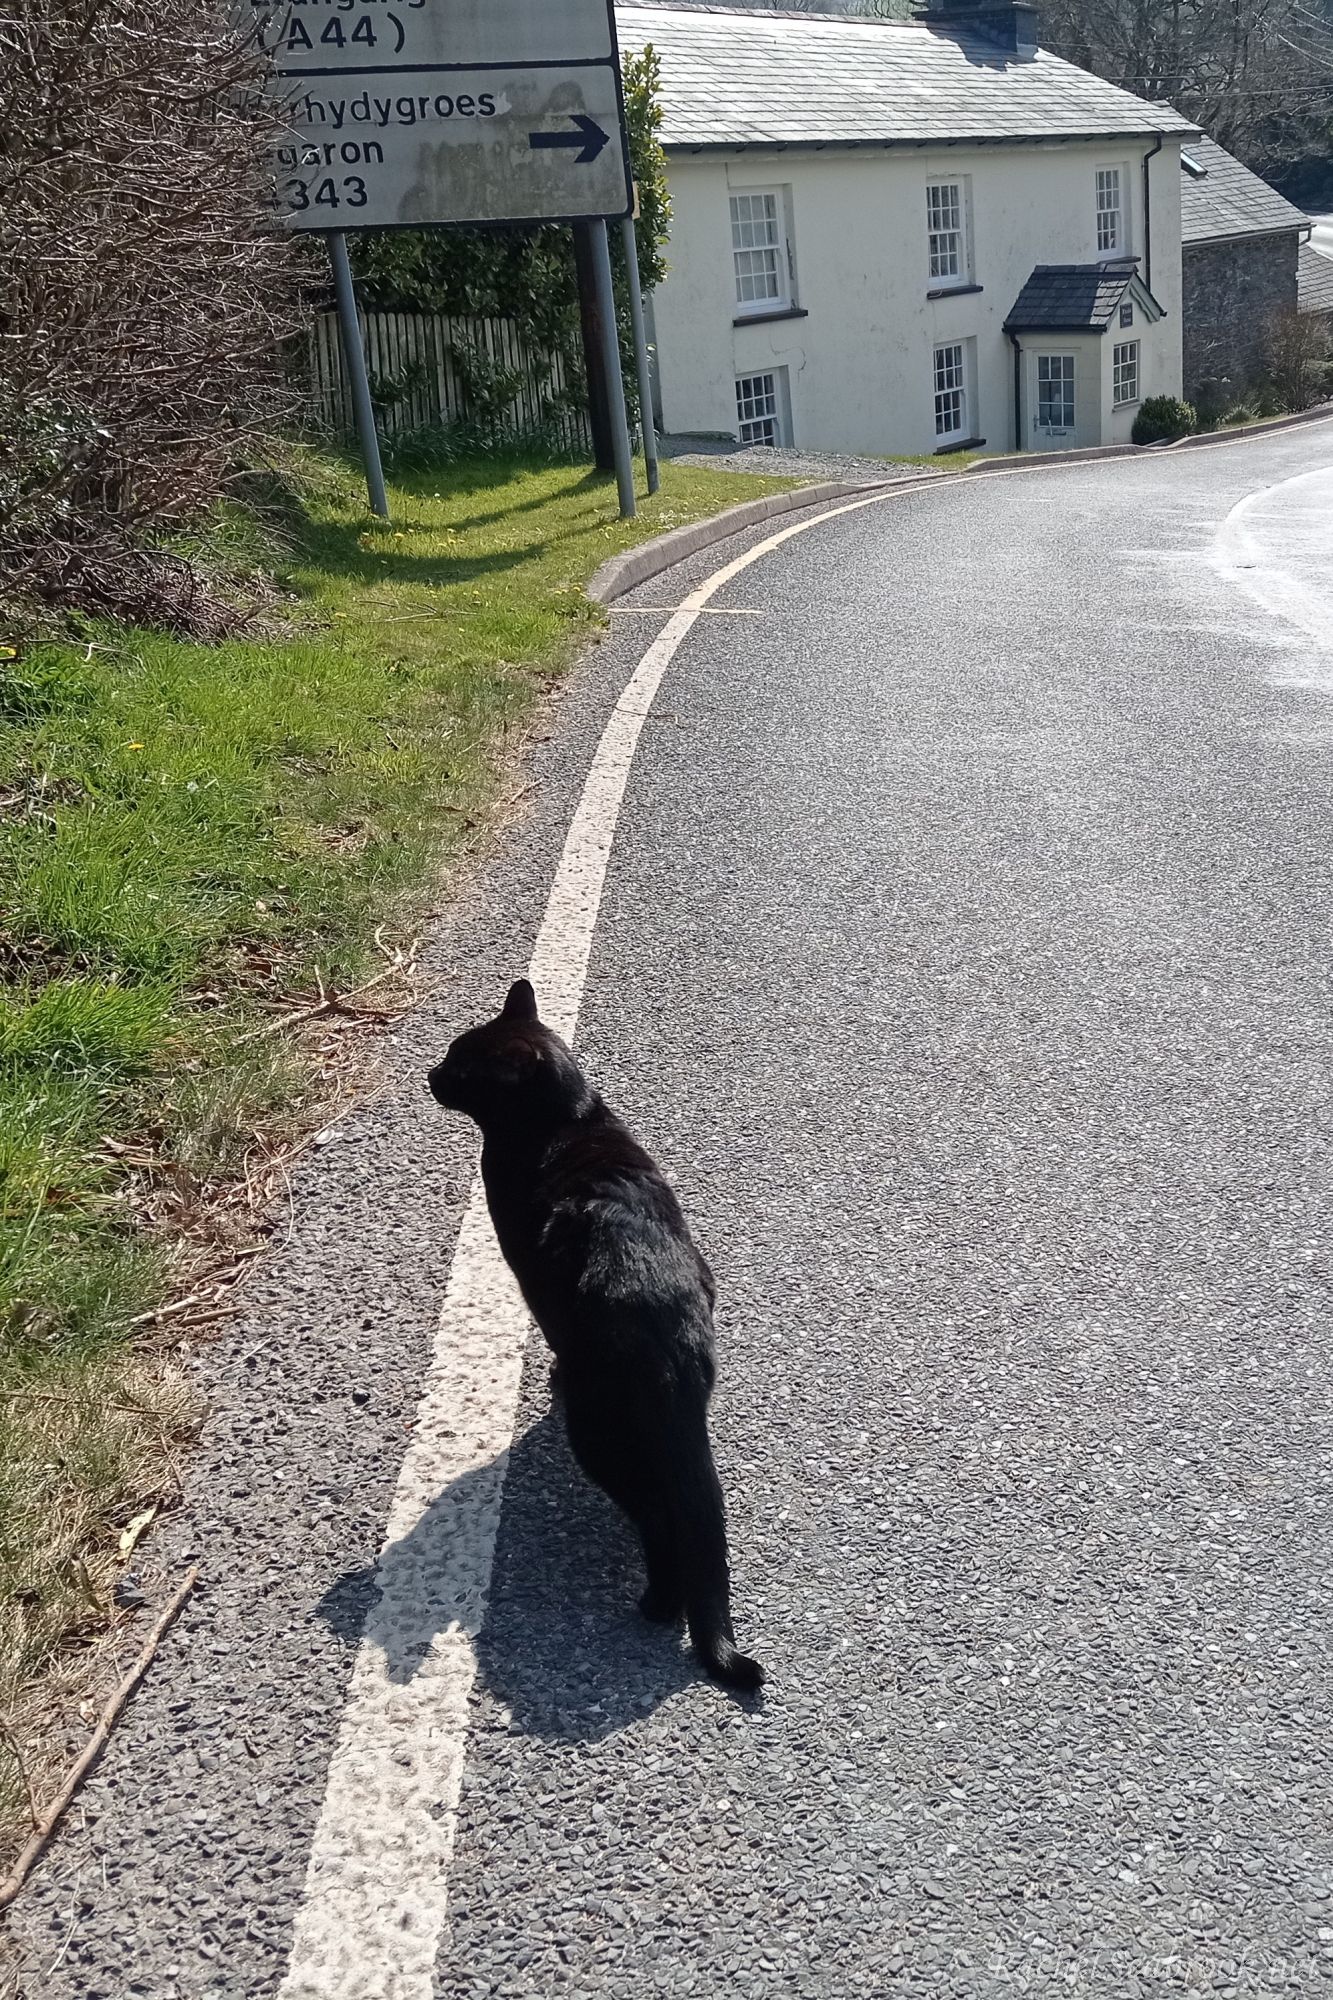 George walking along a road